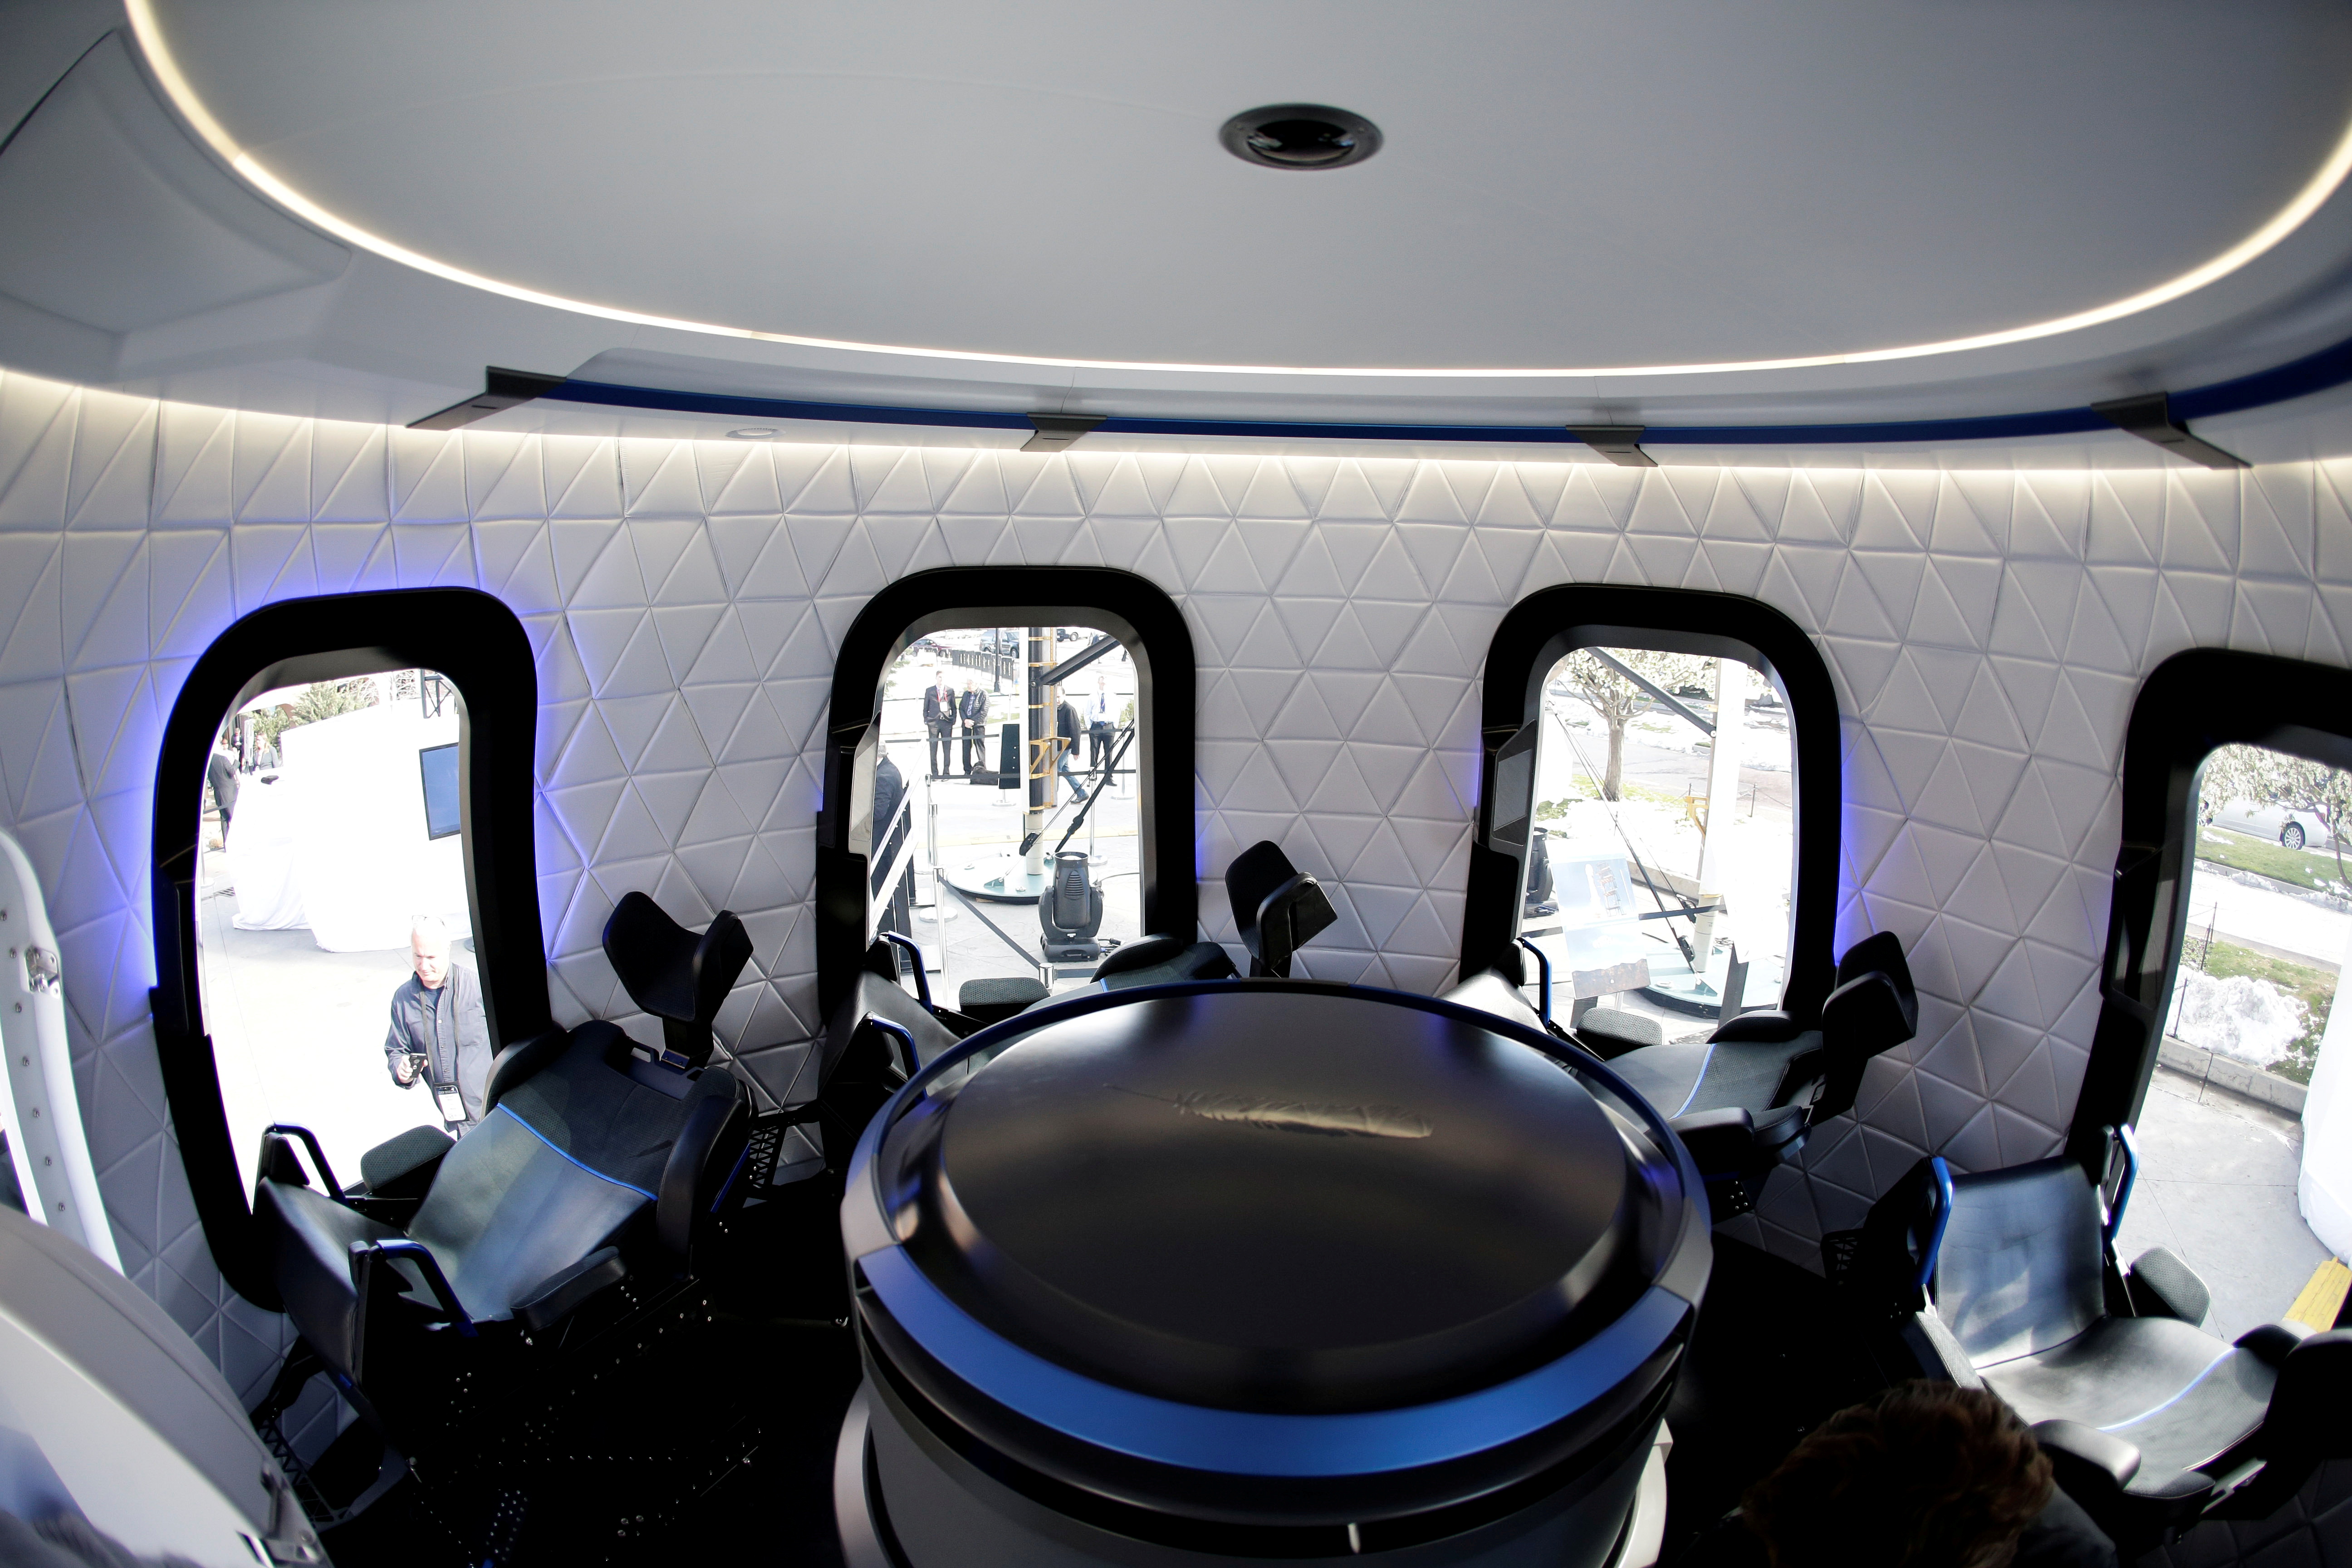 An interior view of the Blue Origin Crew Capsule mockup at the 33rd Space Symposium in Colorado Springs, Colorado